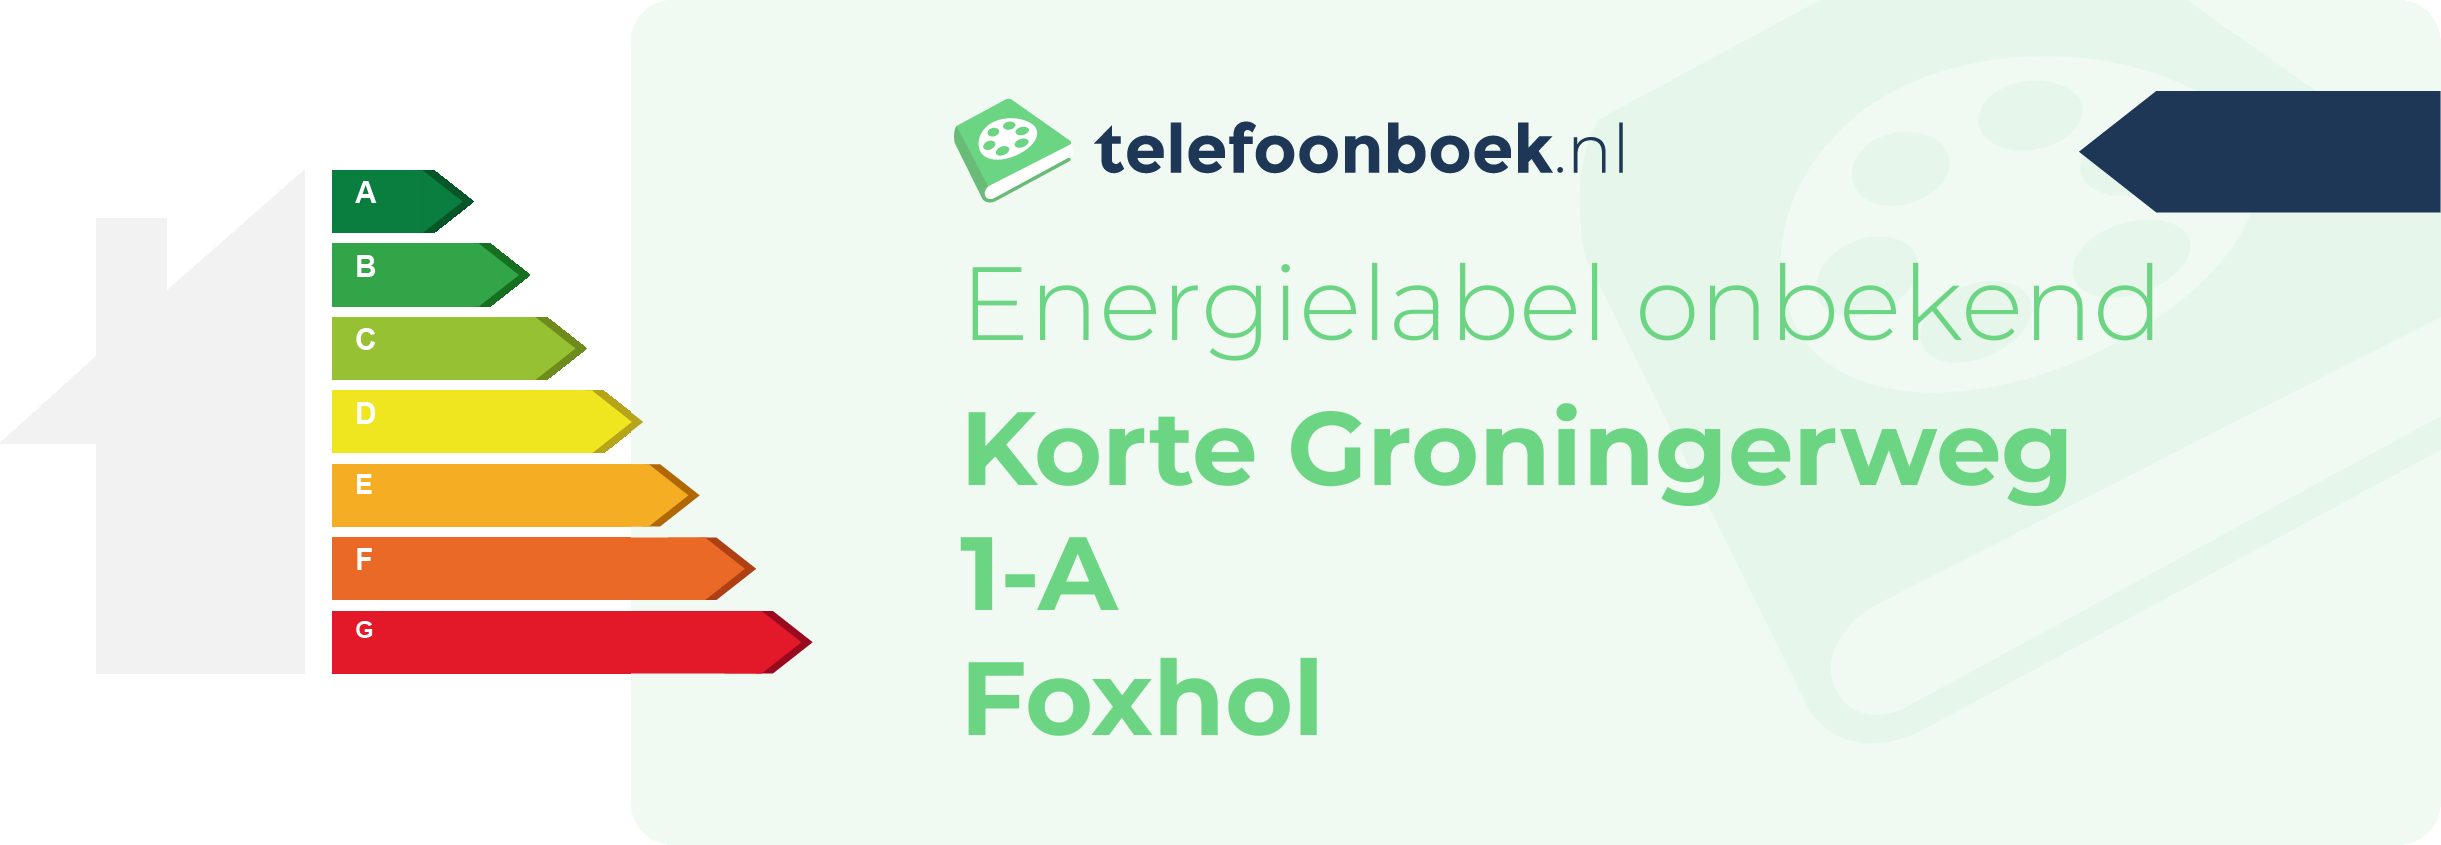 Energielabel Korte Groningerweg 1-A Foxhol